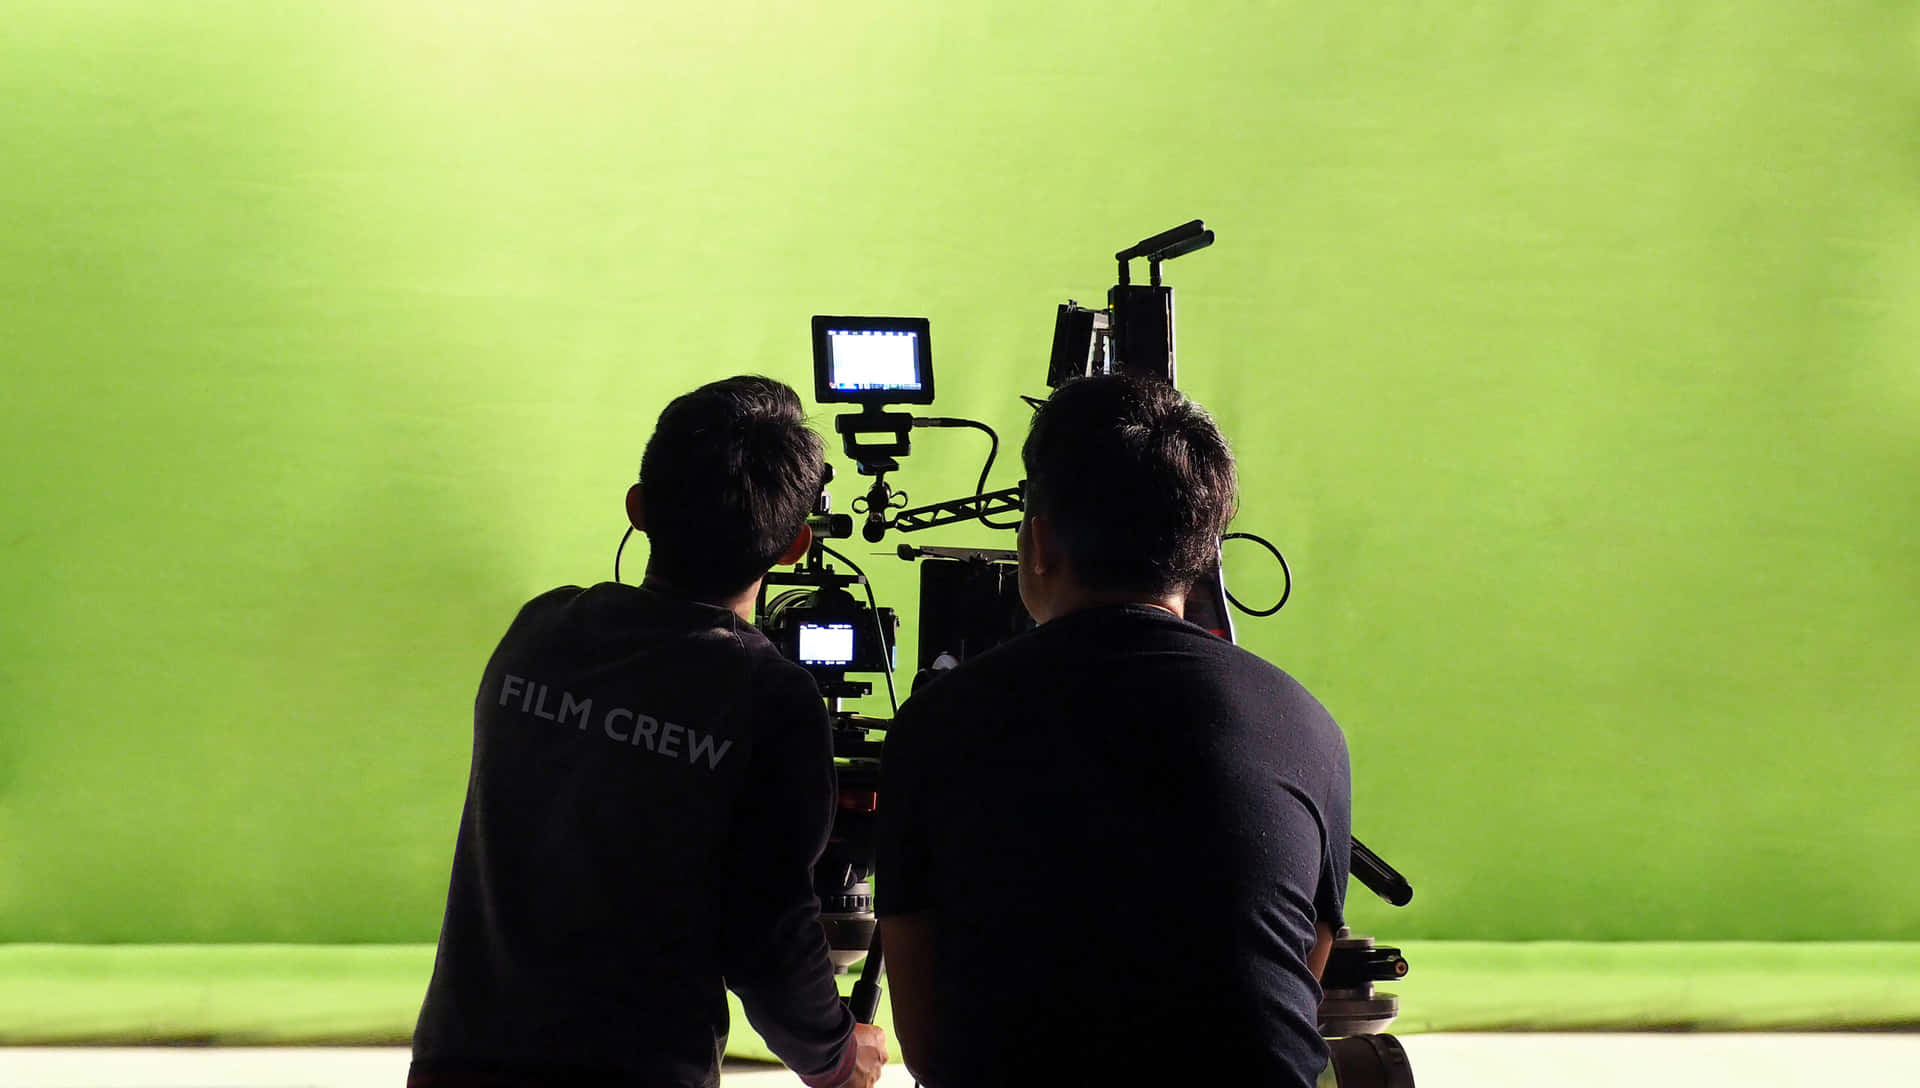 Professional Cameramen at Work in a Green Screen Studio Wallpaper